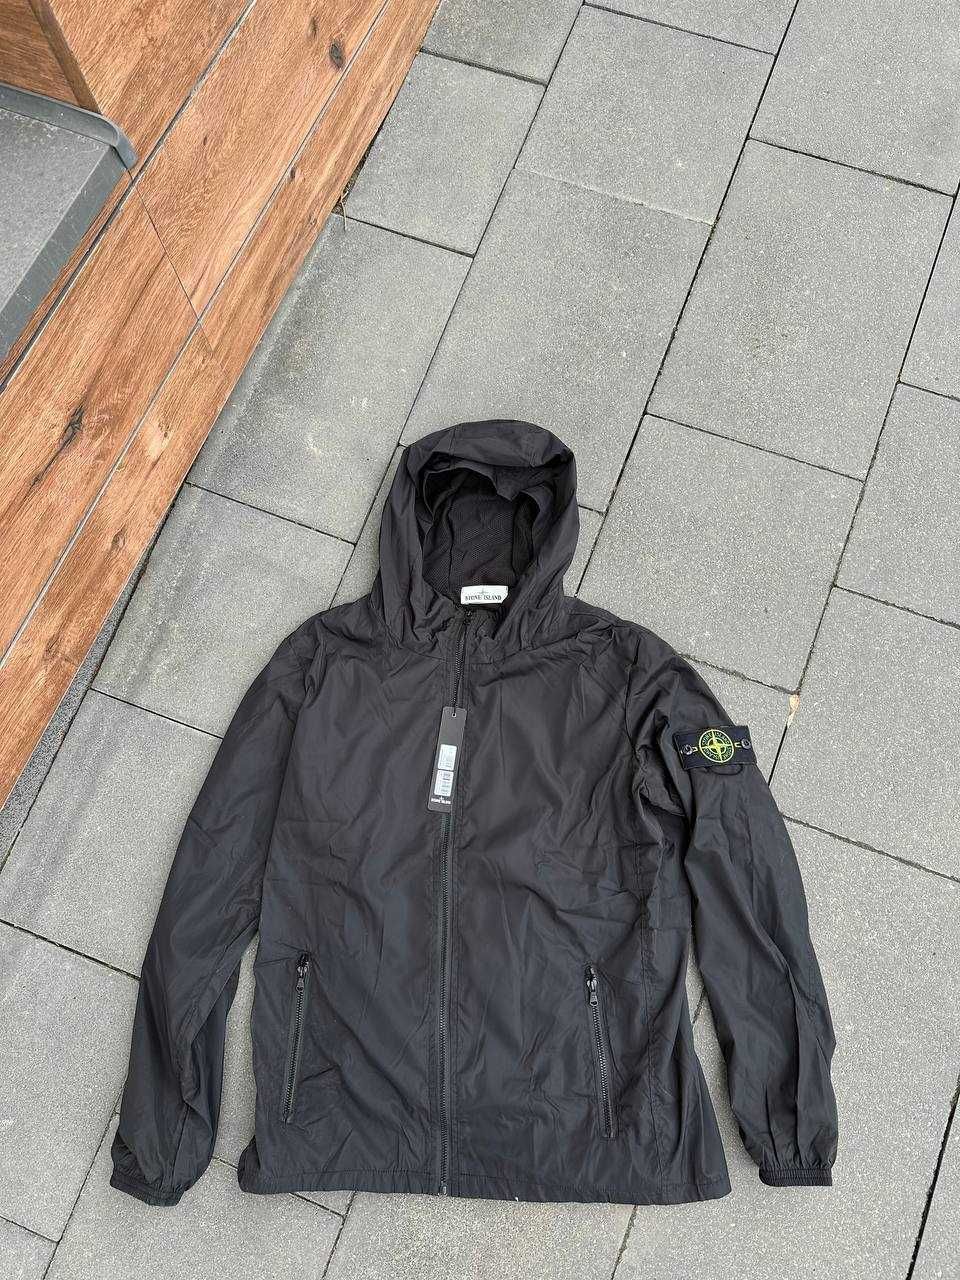 STONE ISLAND // XS S M L XL / Stone Islnad куртка черная мужская новая